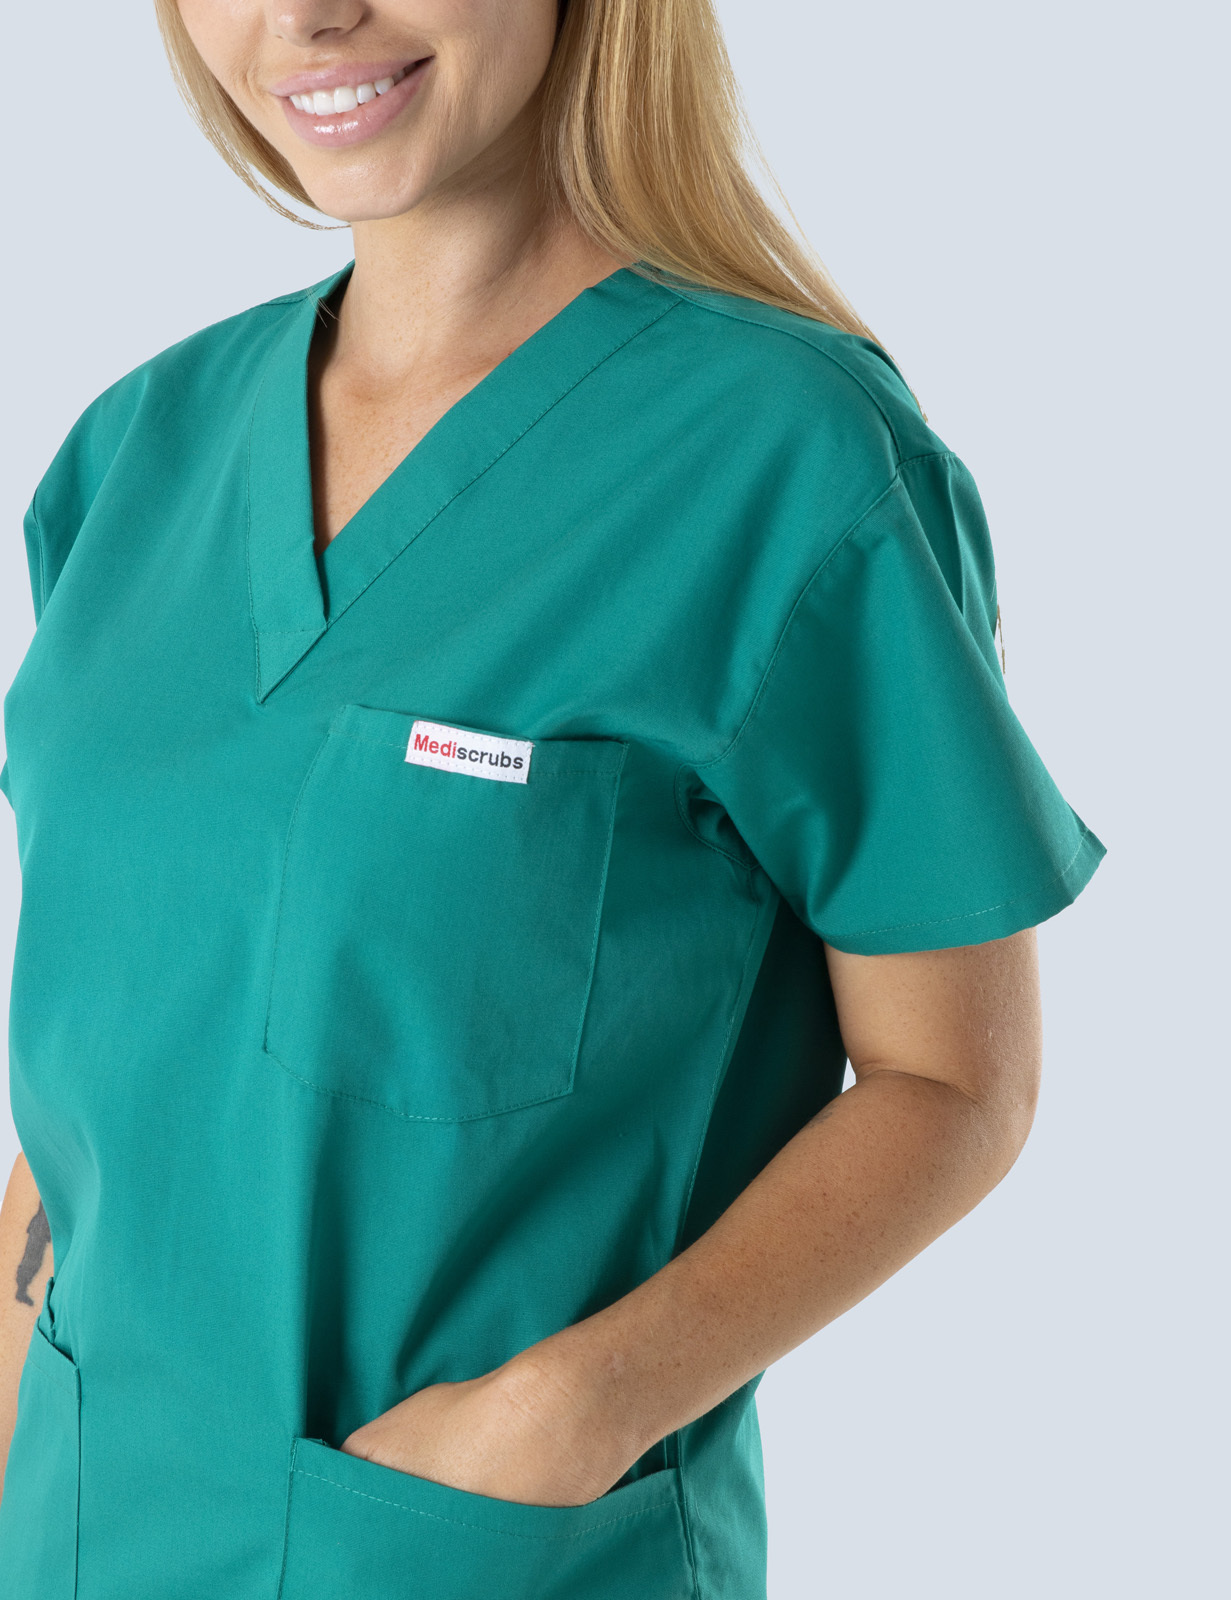 Queensland Children's Hospital Emergency Department Clinical Nurse  Uniform Top Bundle  (4 Pocket Top in Hunter  incl Logos)